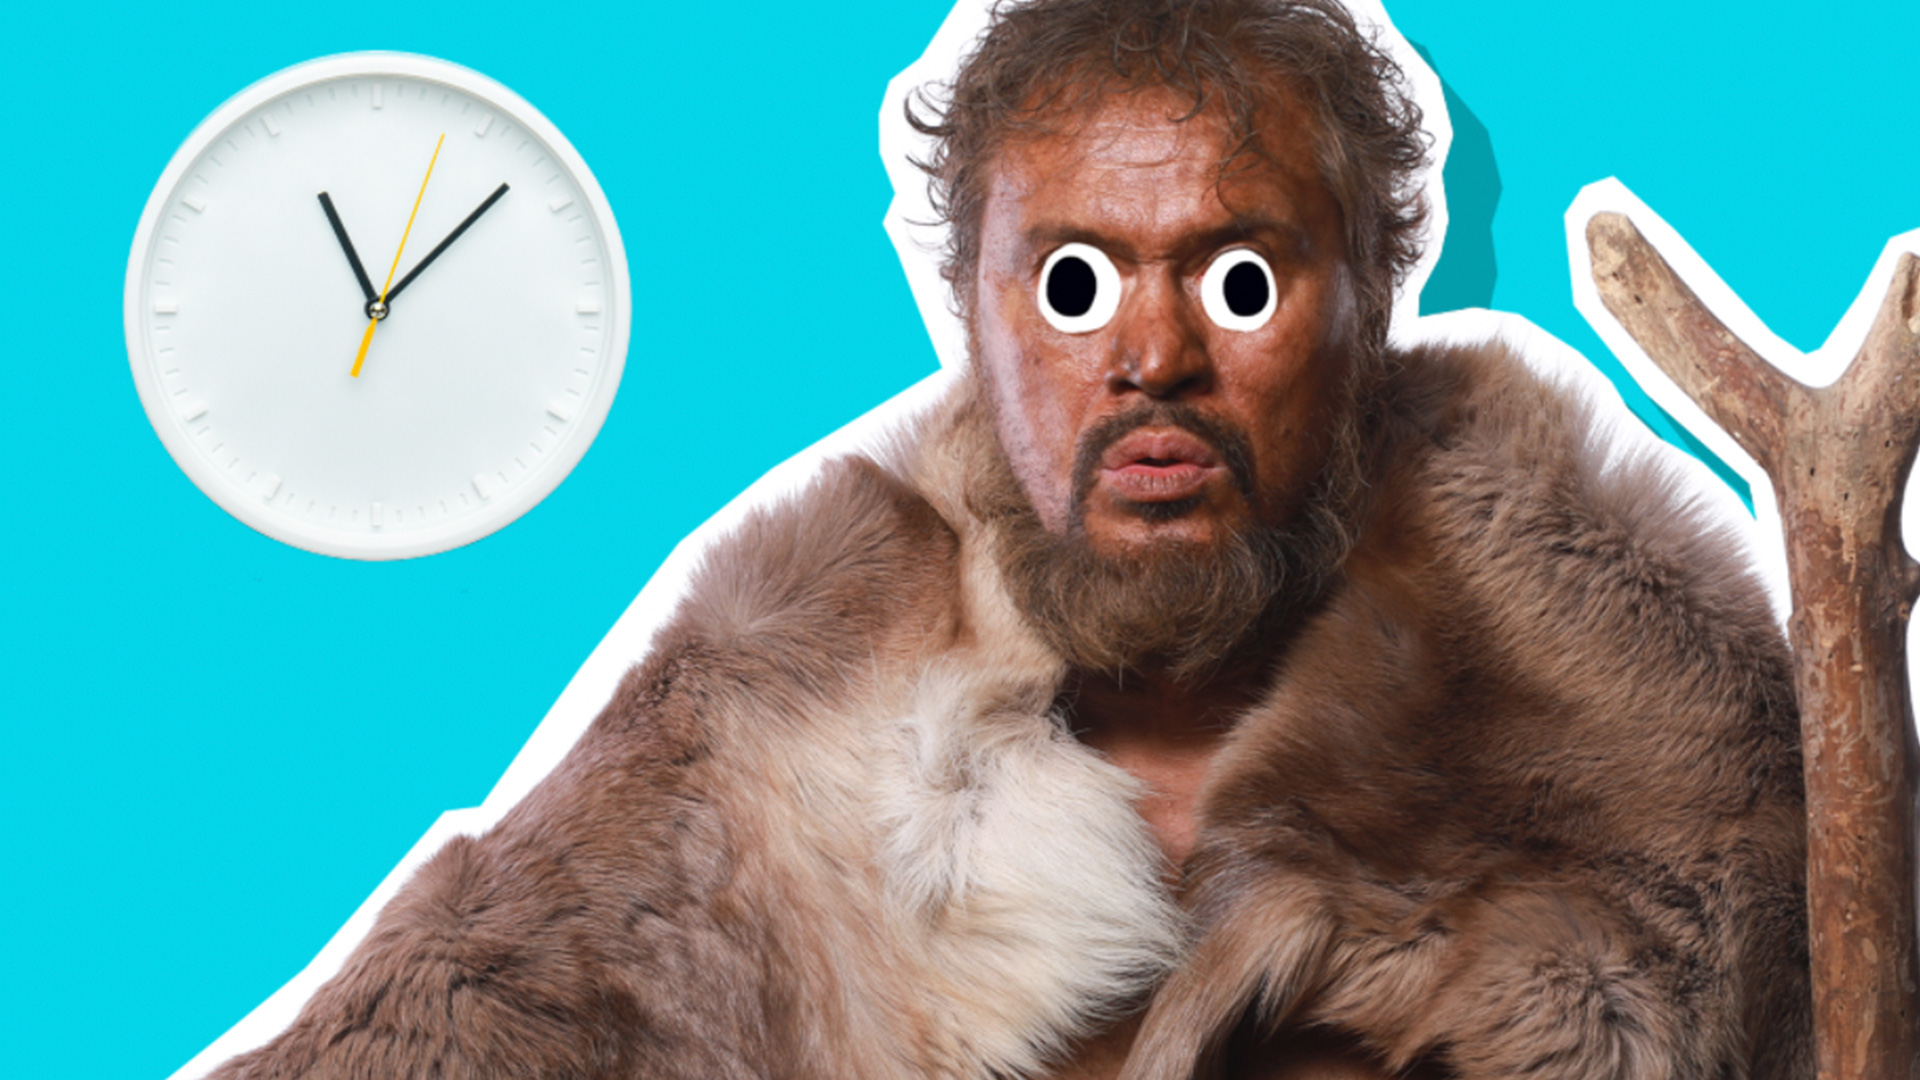 A caveman and a kitchen clock